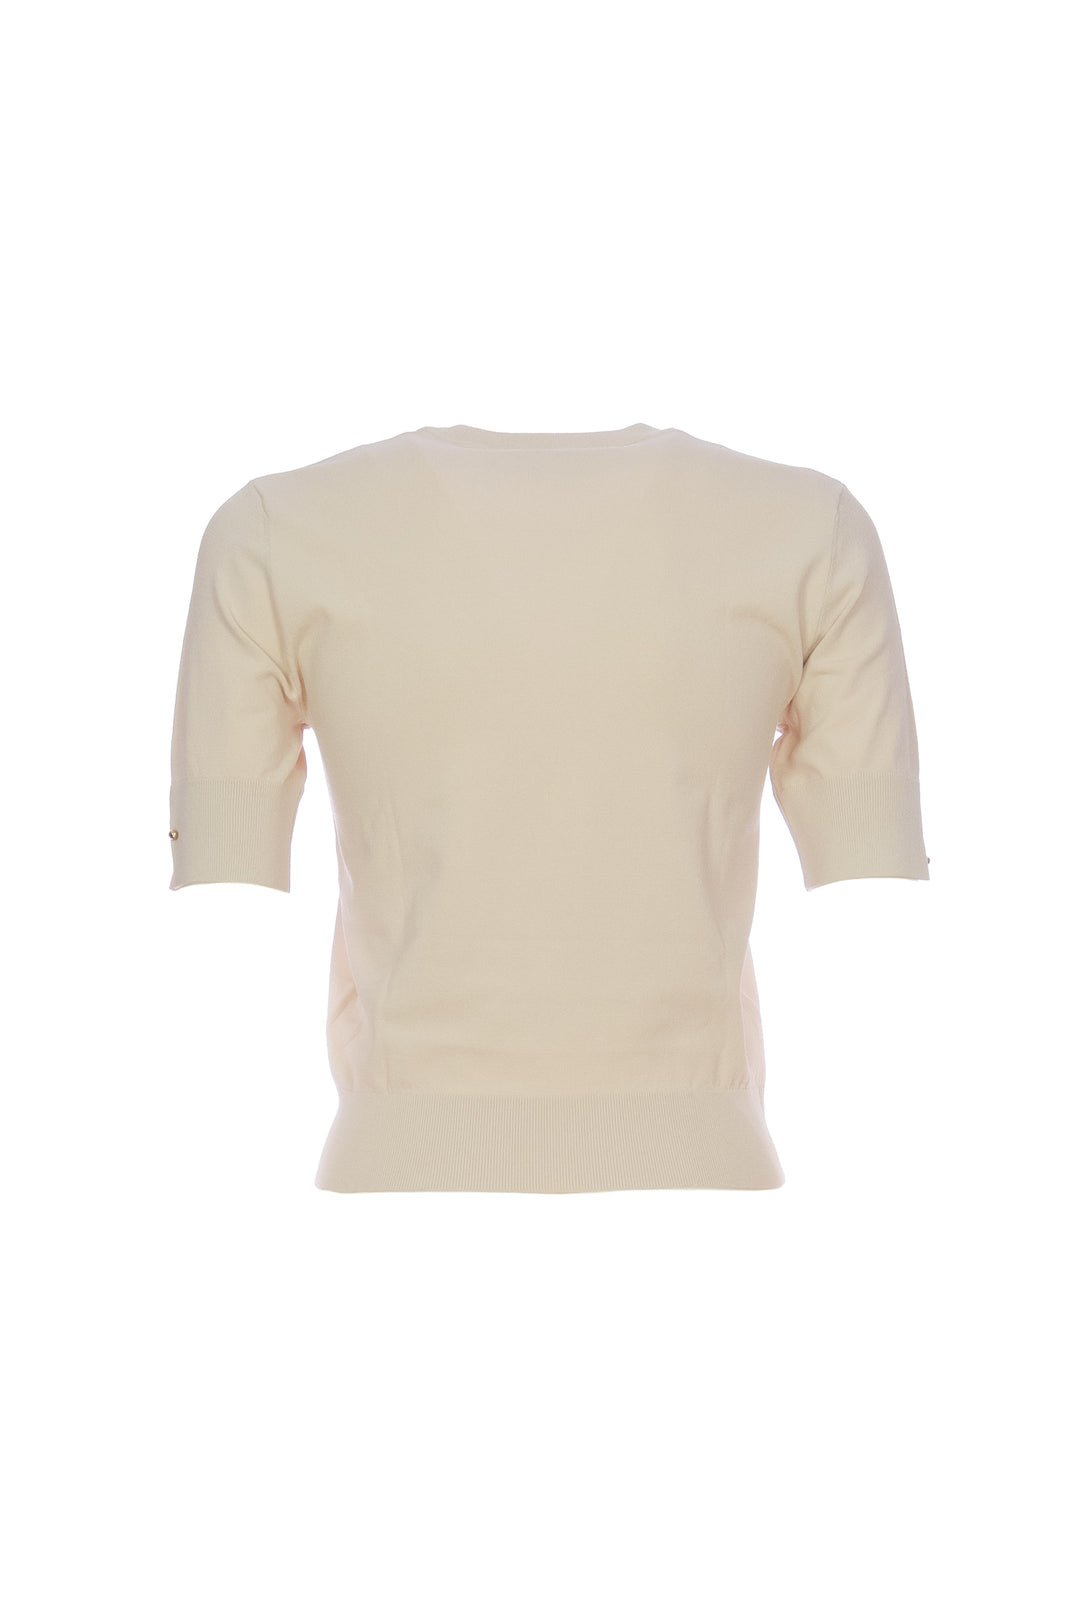 KAOS T-shirt girocollo gesso in maglia - Mancinelli 1954